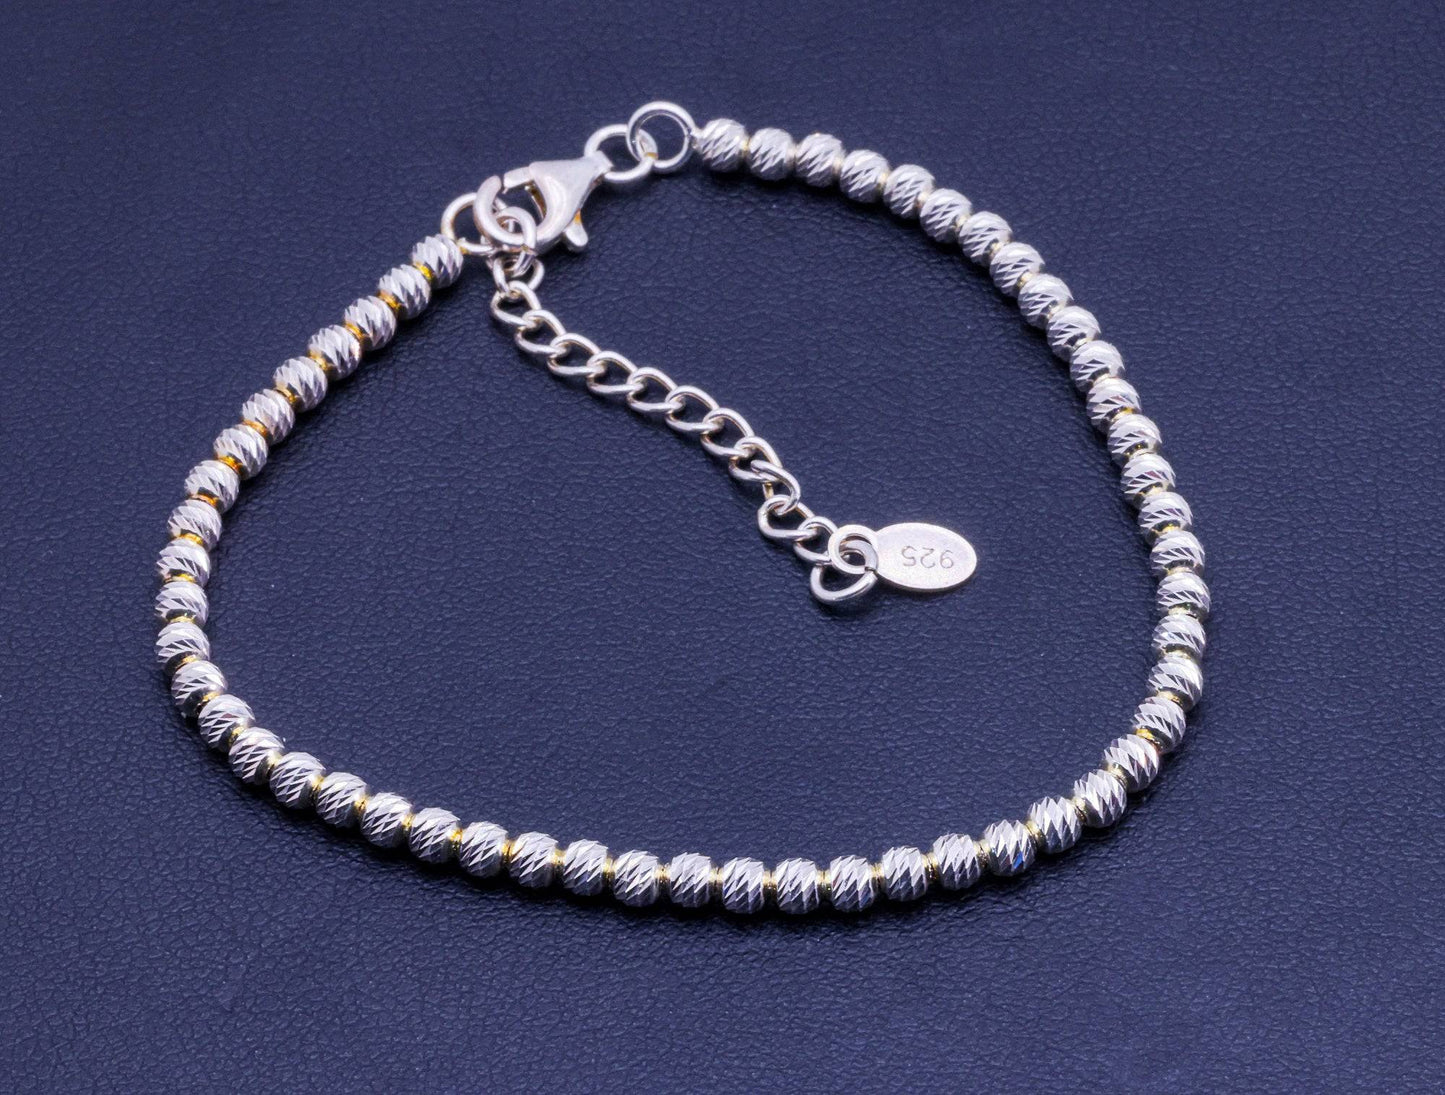 Fashionable Silver Bracelet for Women - 5g | 11cm | Exotics Silver